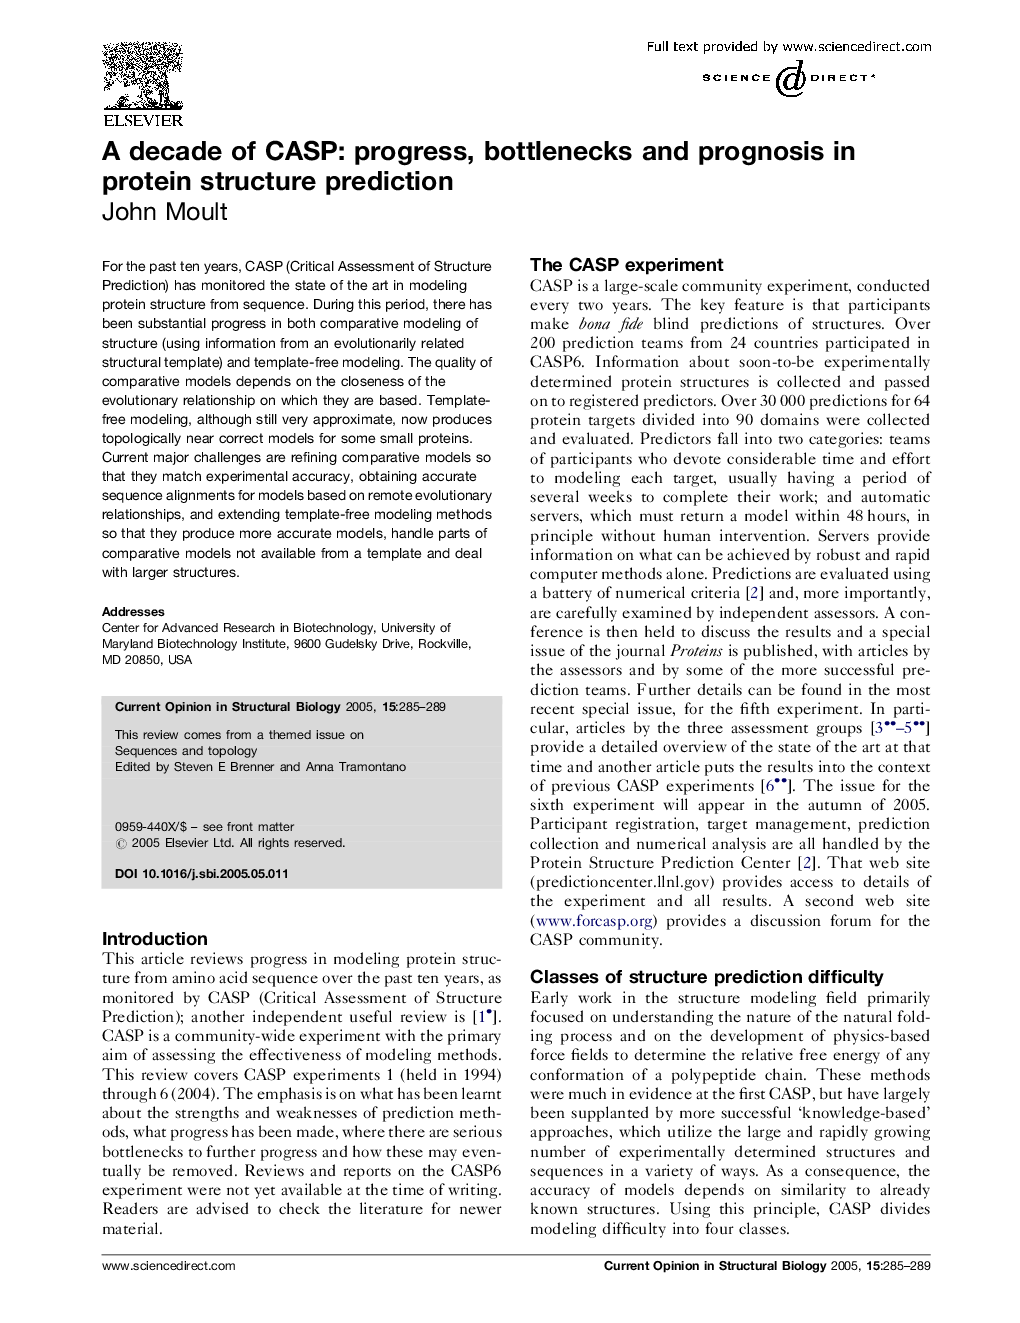 A decade of CASP: progress, bottlenecks and prognosis in protein structure prediction